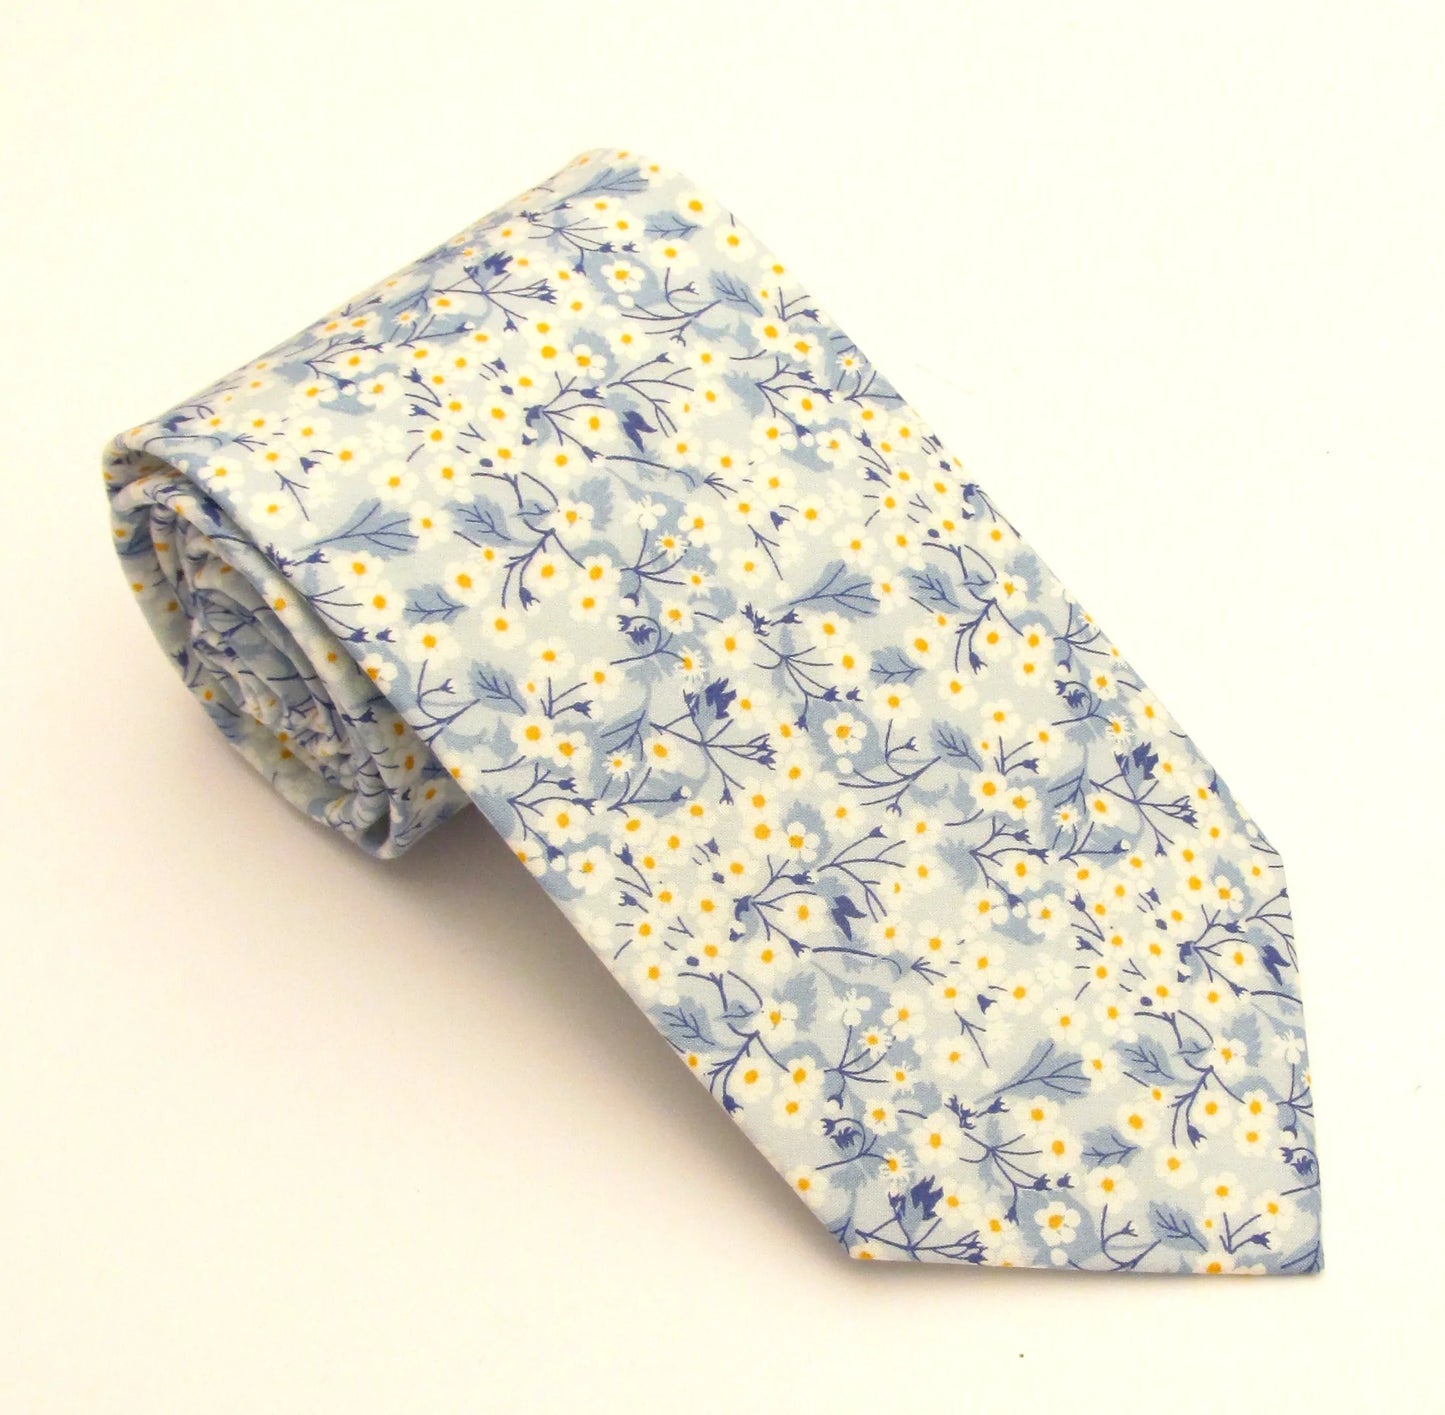 Mitsi Liberty fabric tie by Van Buck